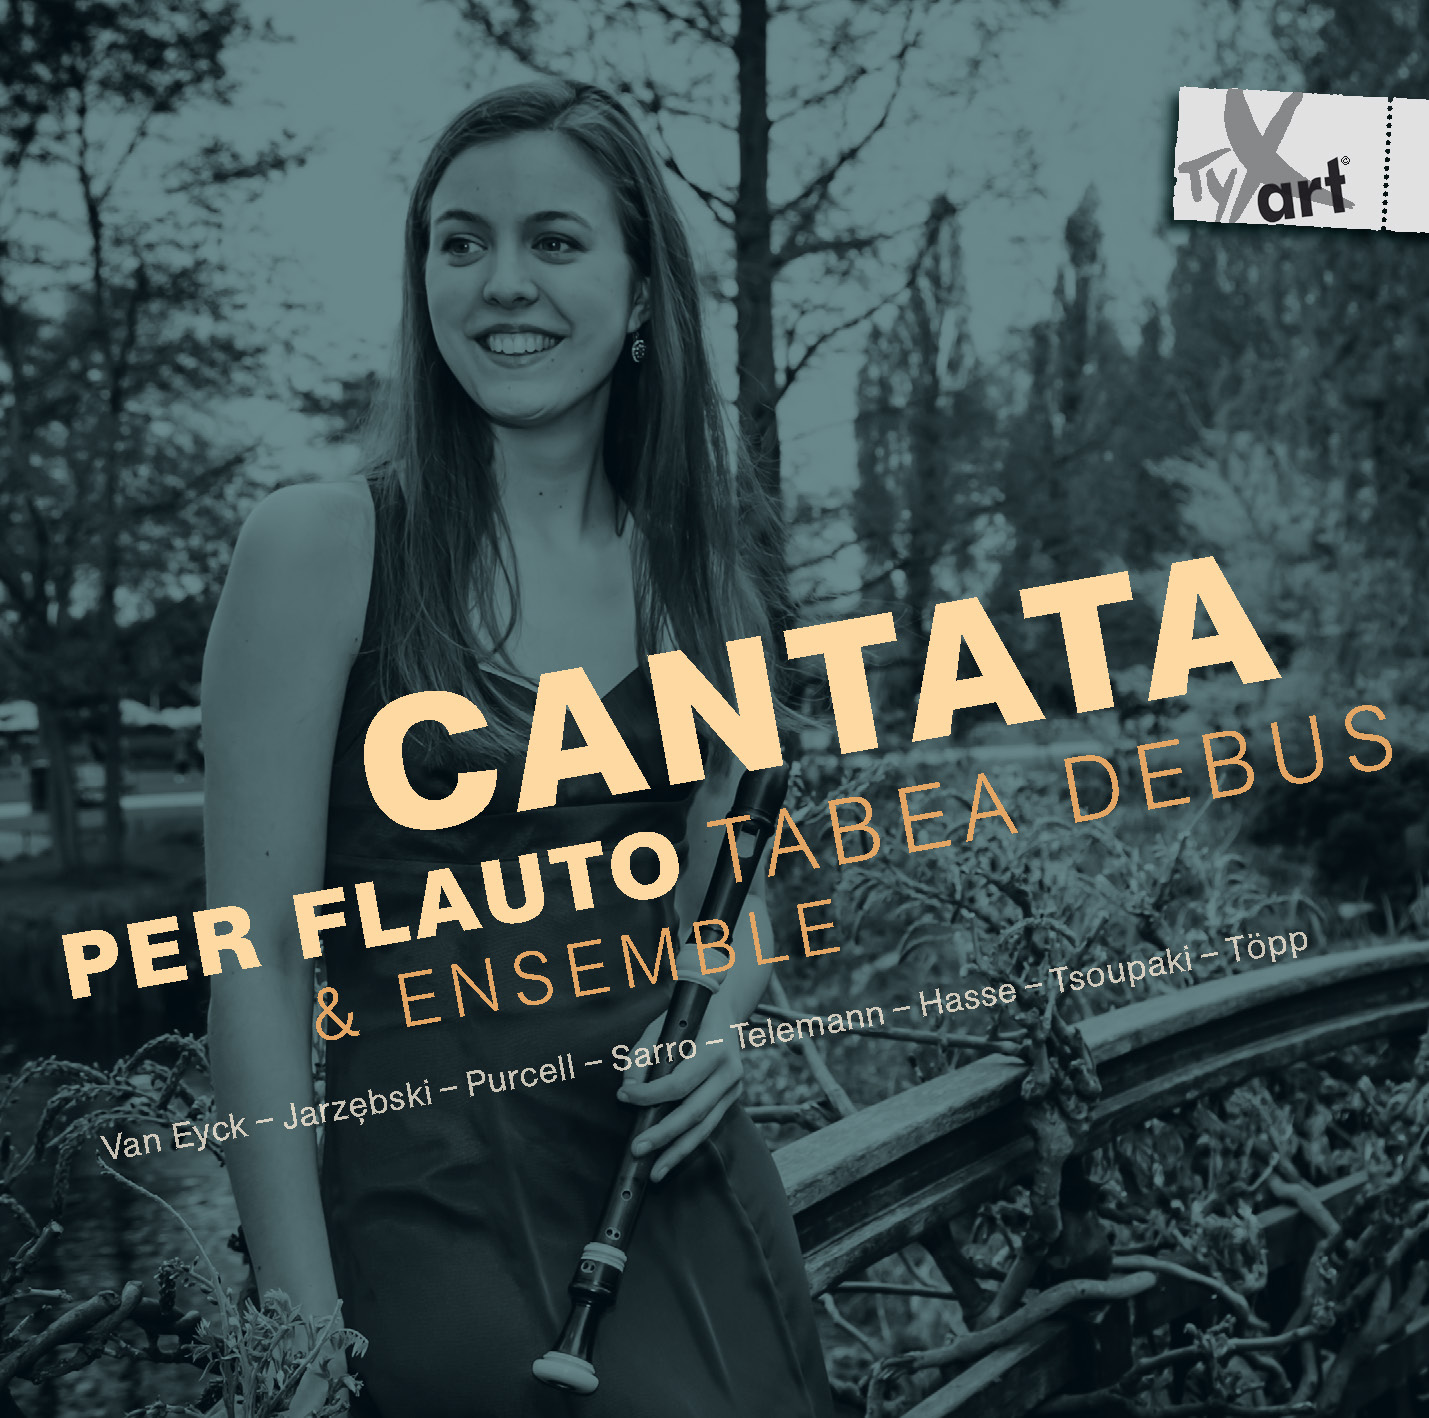 Cantata per Flauto - Tabea Debus and Ensemble